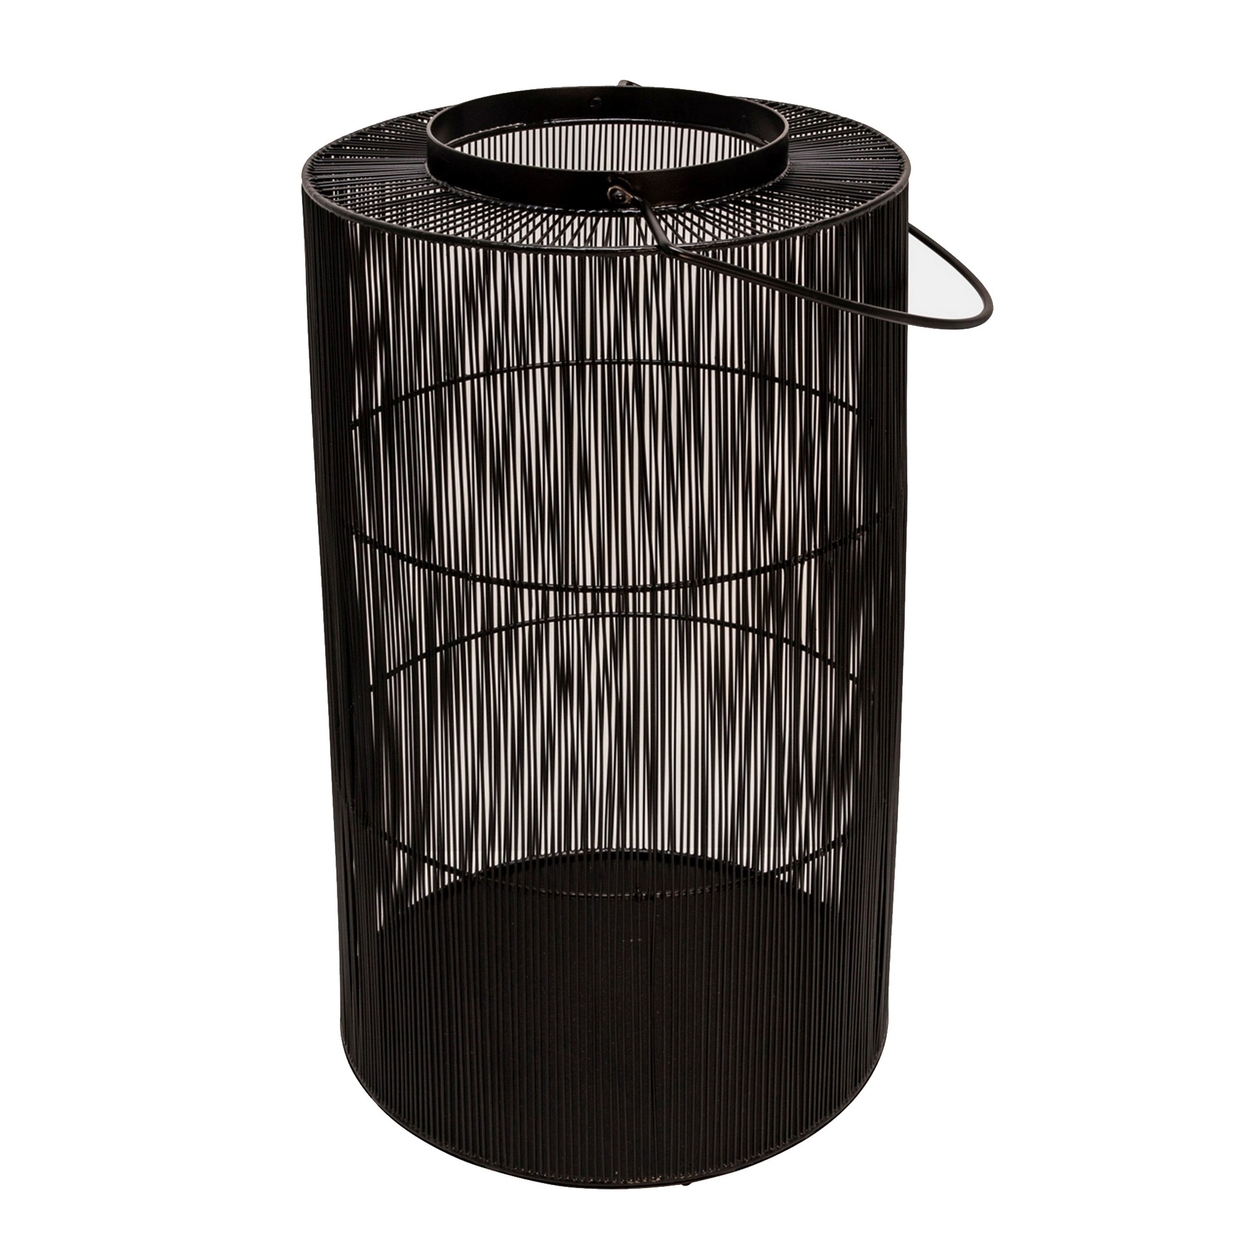 26 Inch Tall Lantern, Round Body Shape, Black Metal Wire Mesh With Handle -Saltoro Sherpi